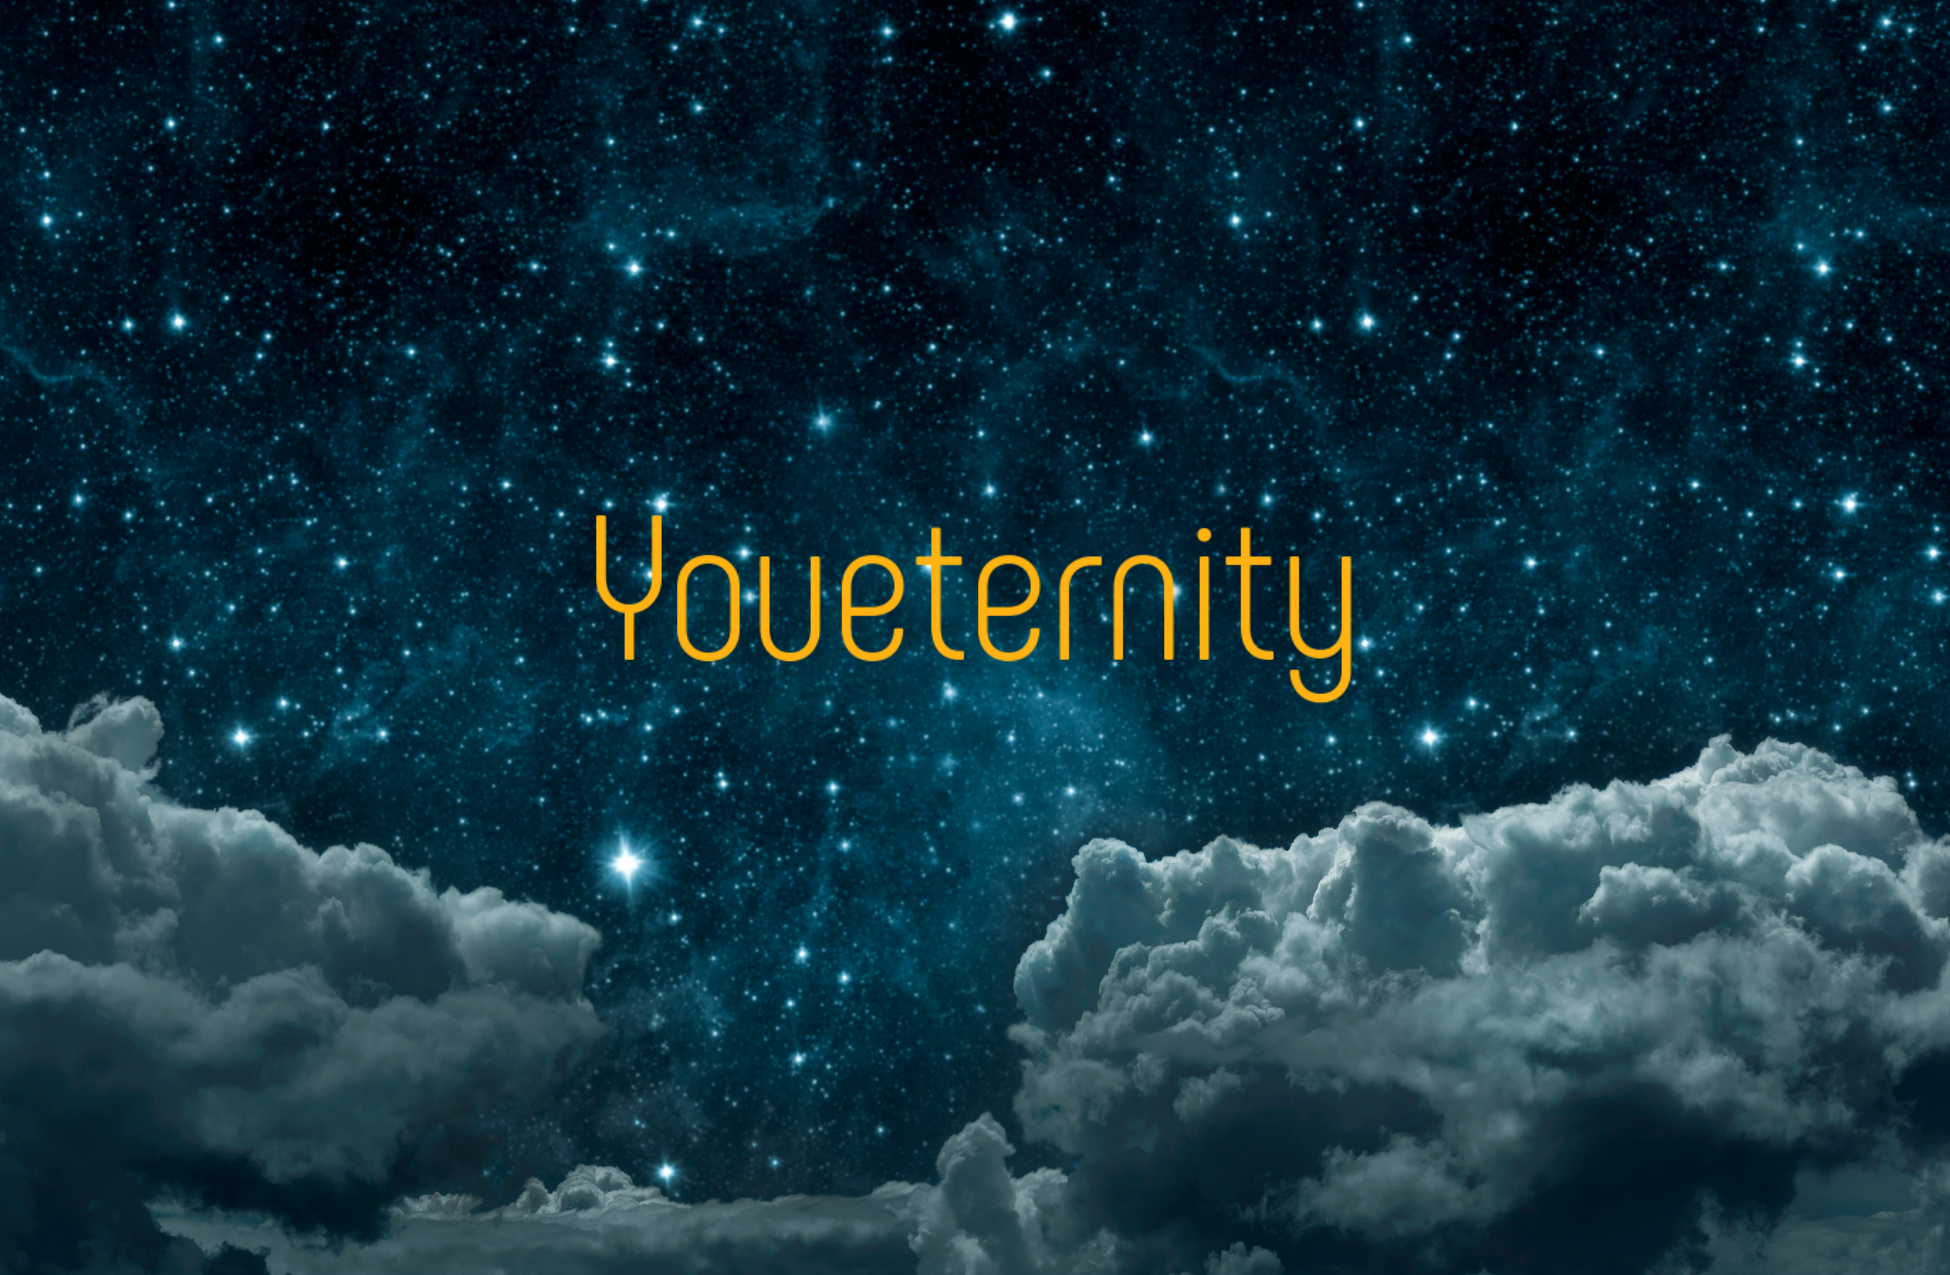 Youeternity